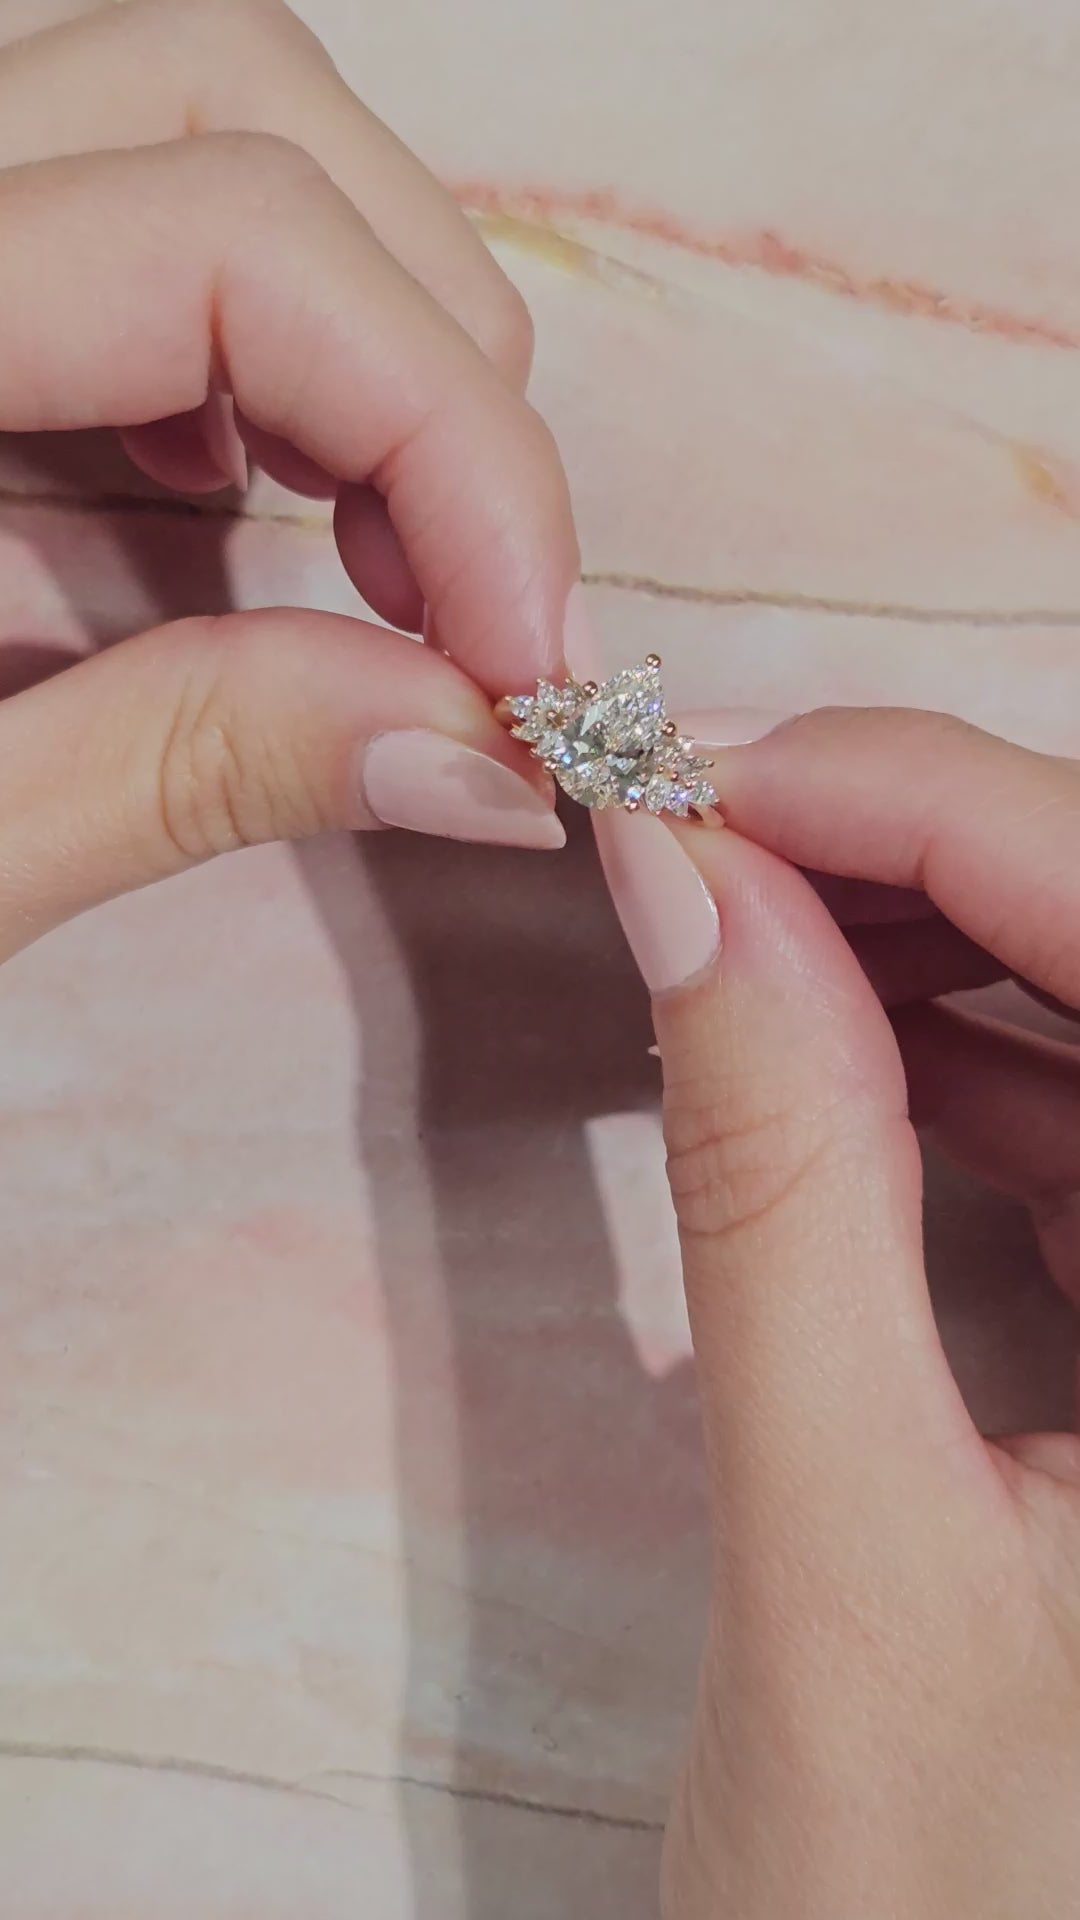 Lola Pear Diamond Engagement Ring Setting